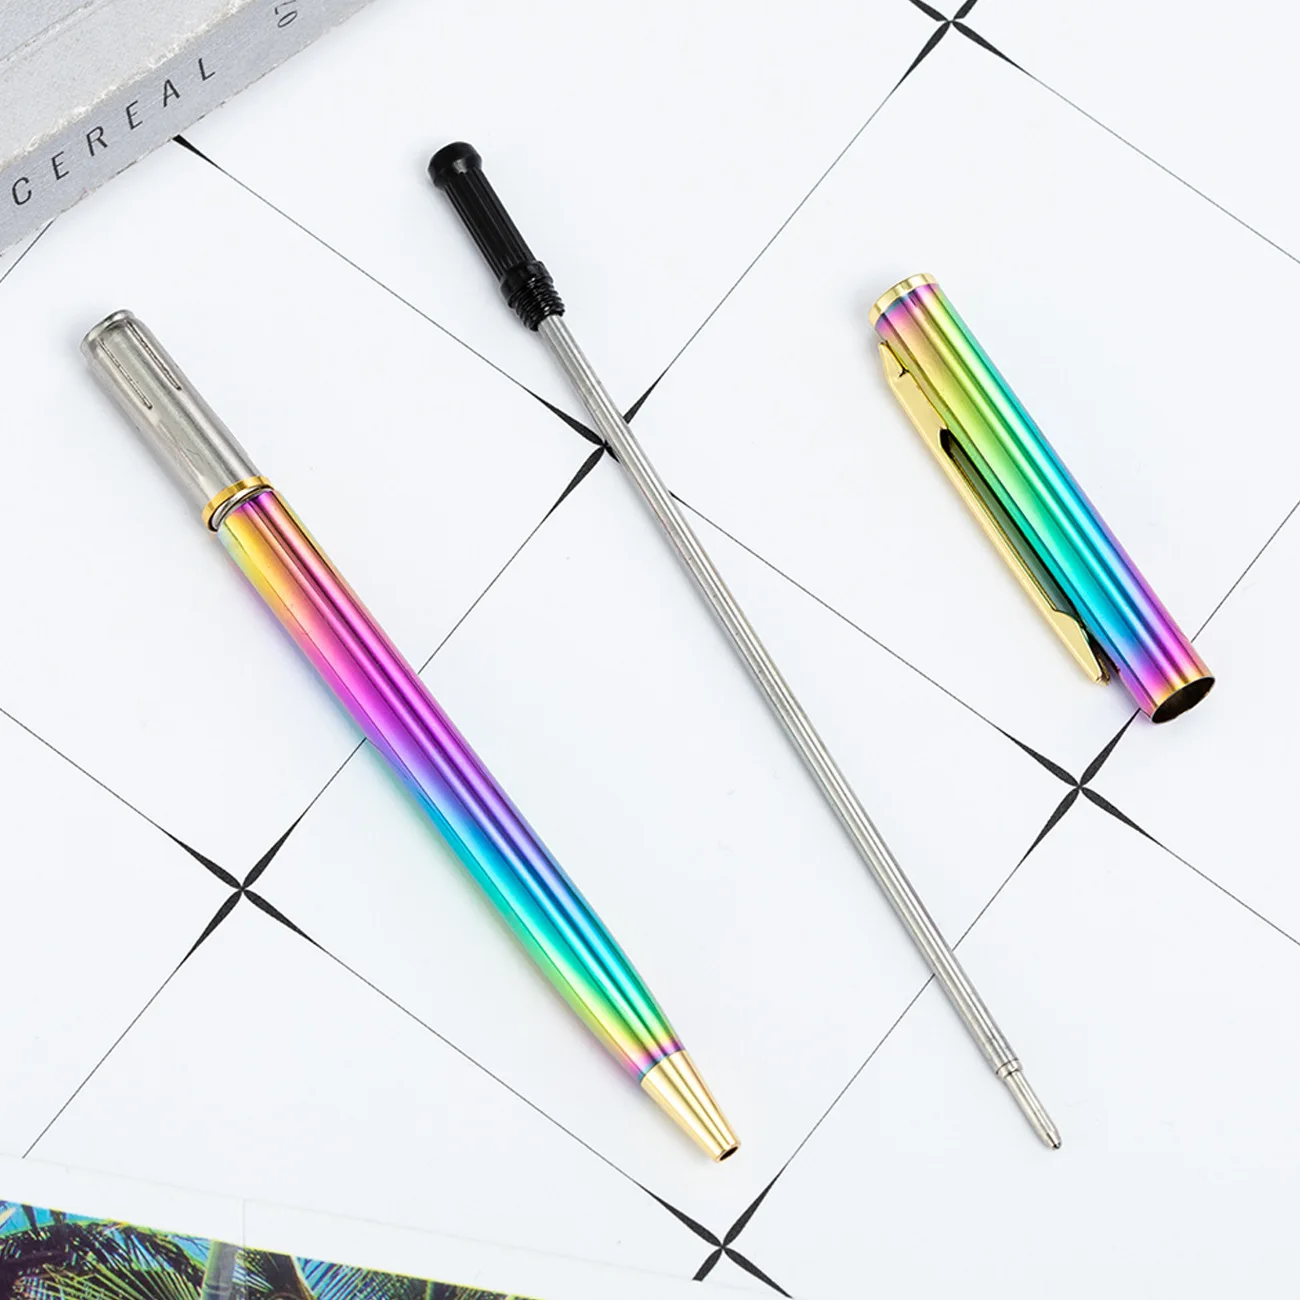 Dazzling farbe trend unterschrift stift 11,6 cm metall kugelschreiber refill büro kultur und bildung unterschrift stift